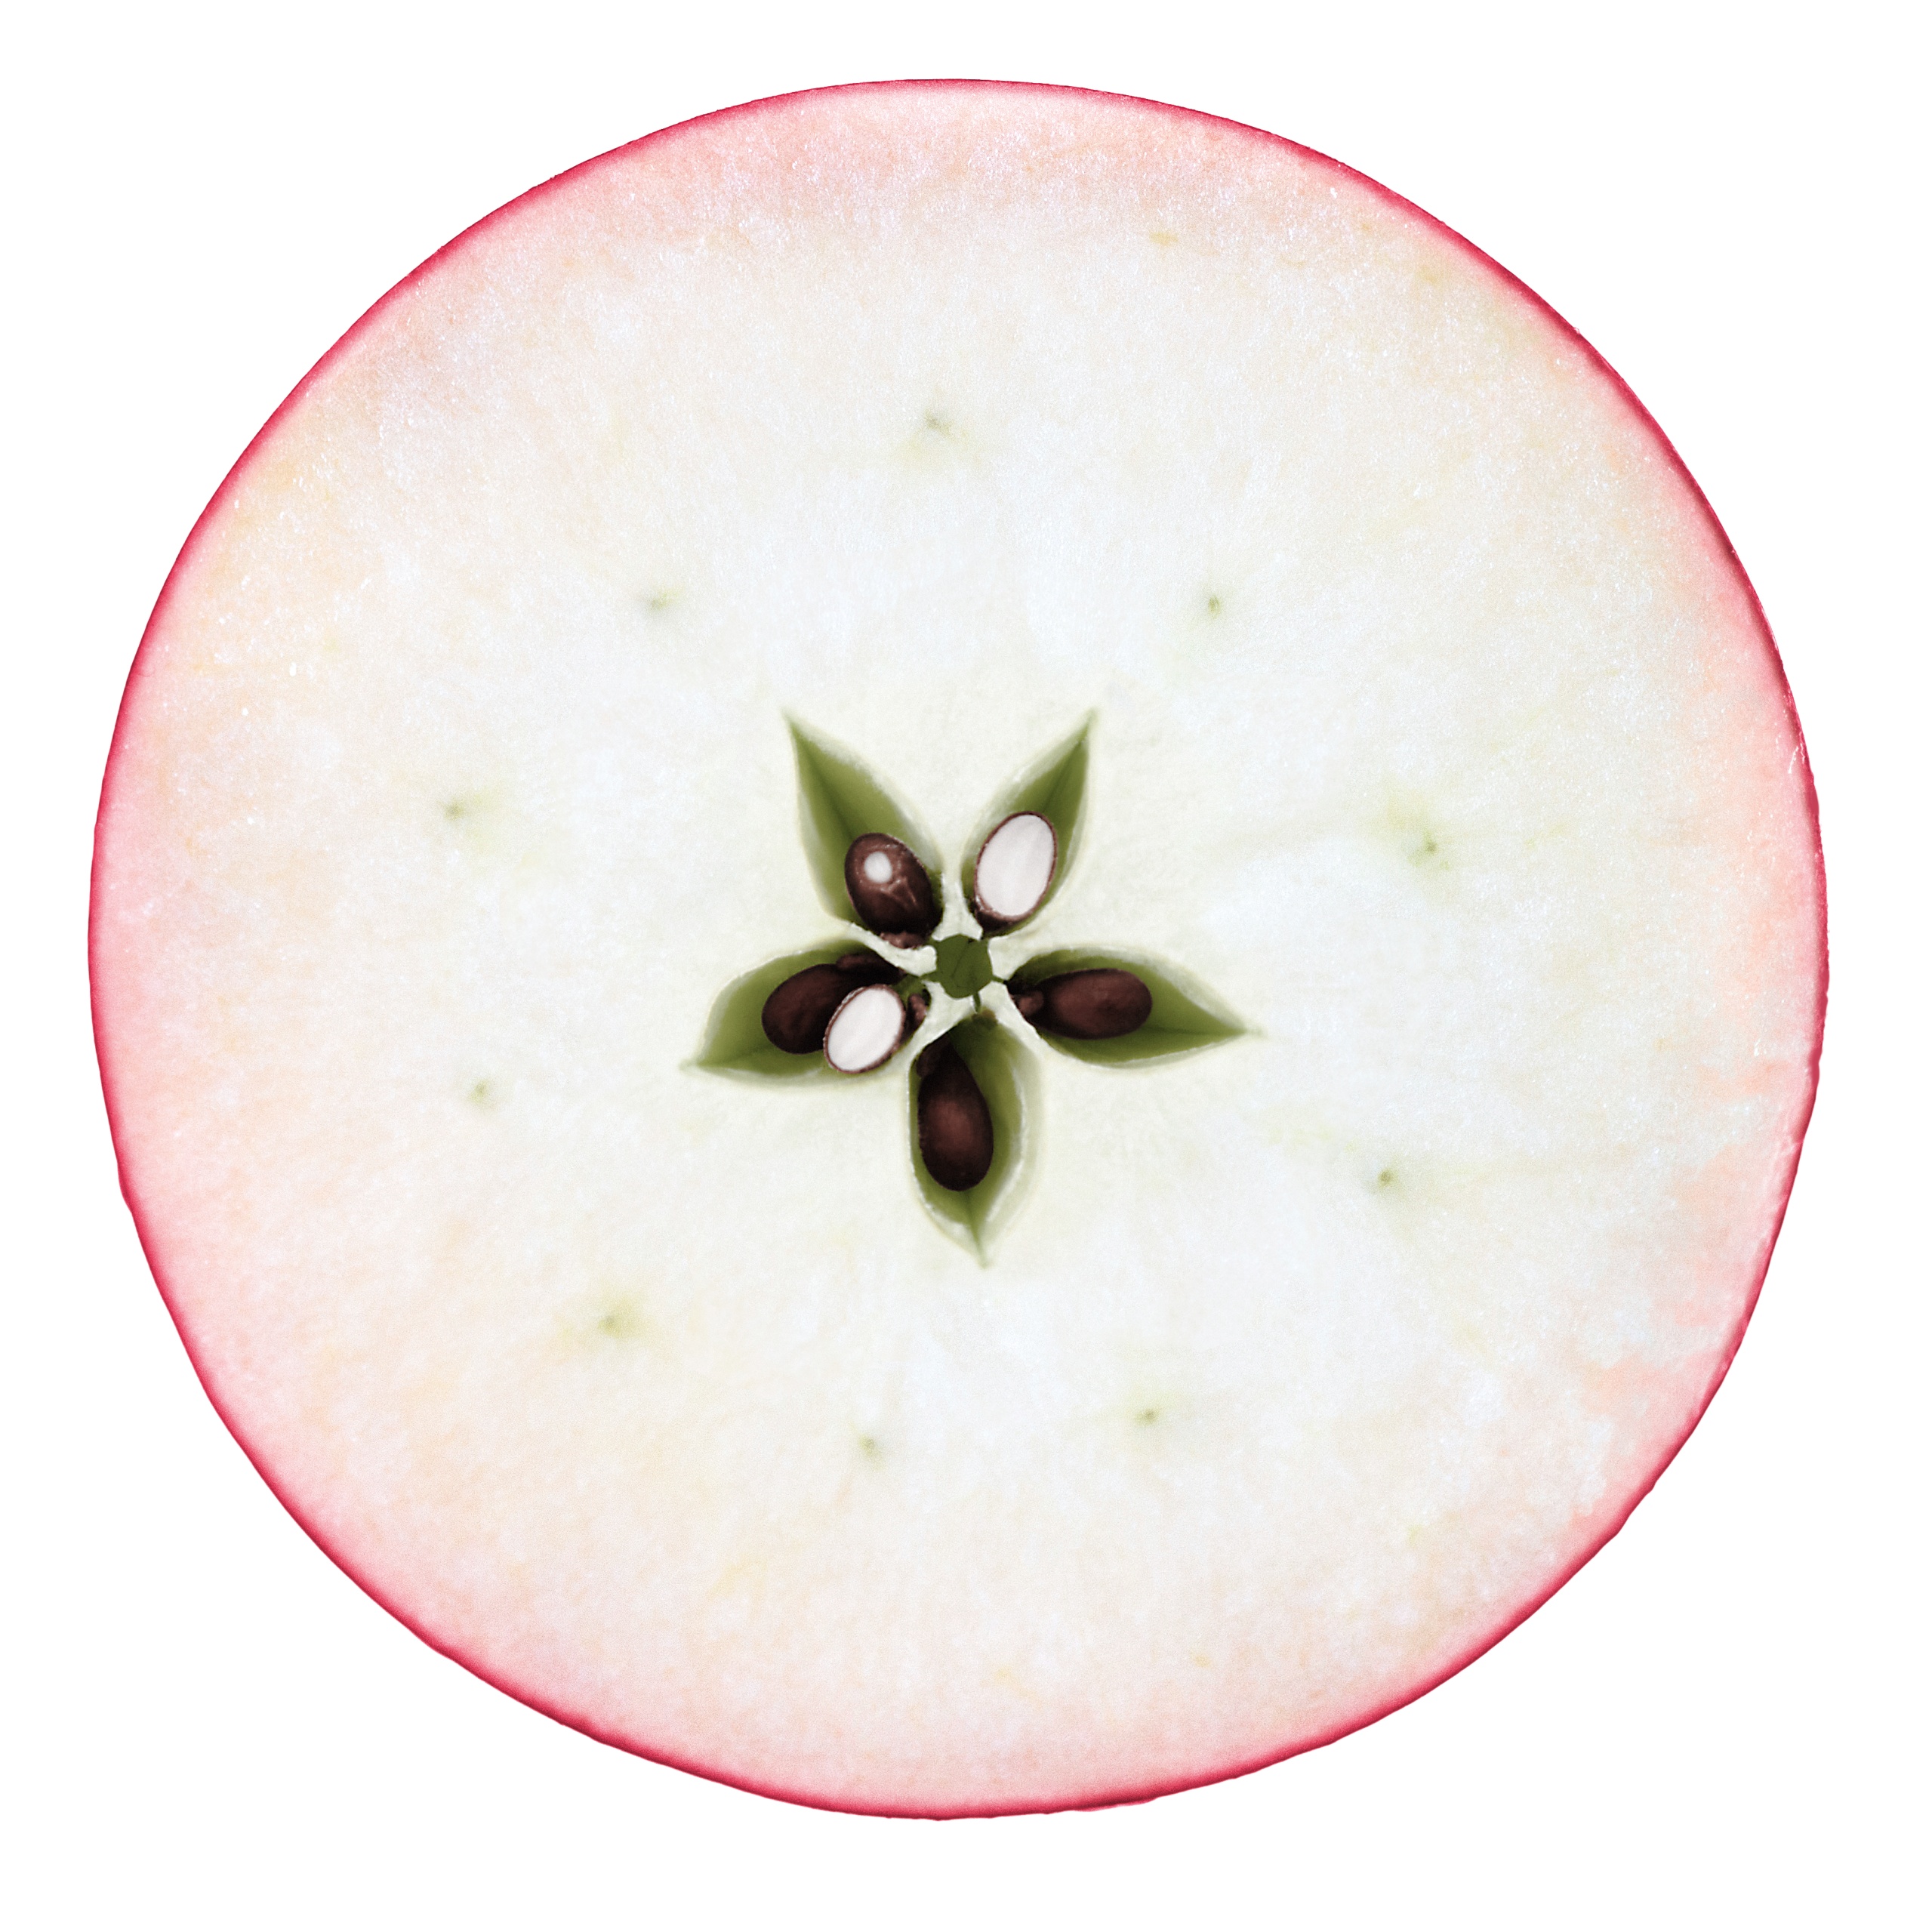 Malus - Apple; Malus  - Apfel